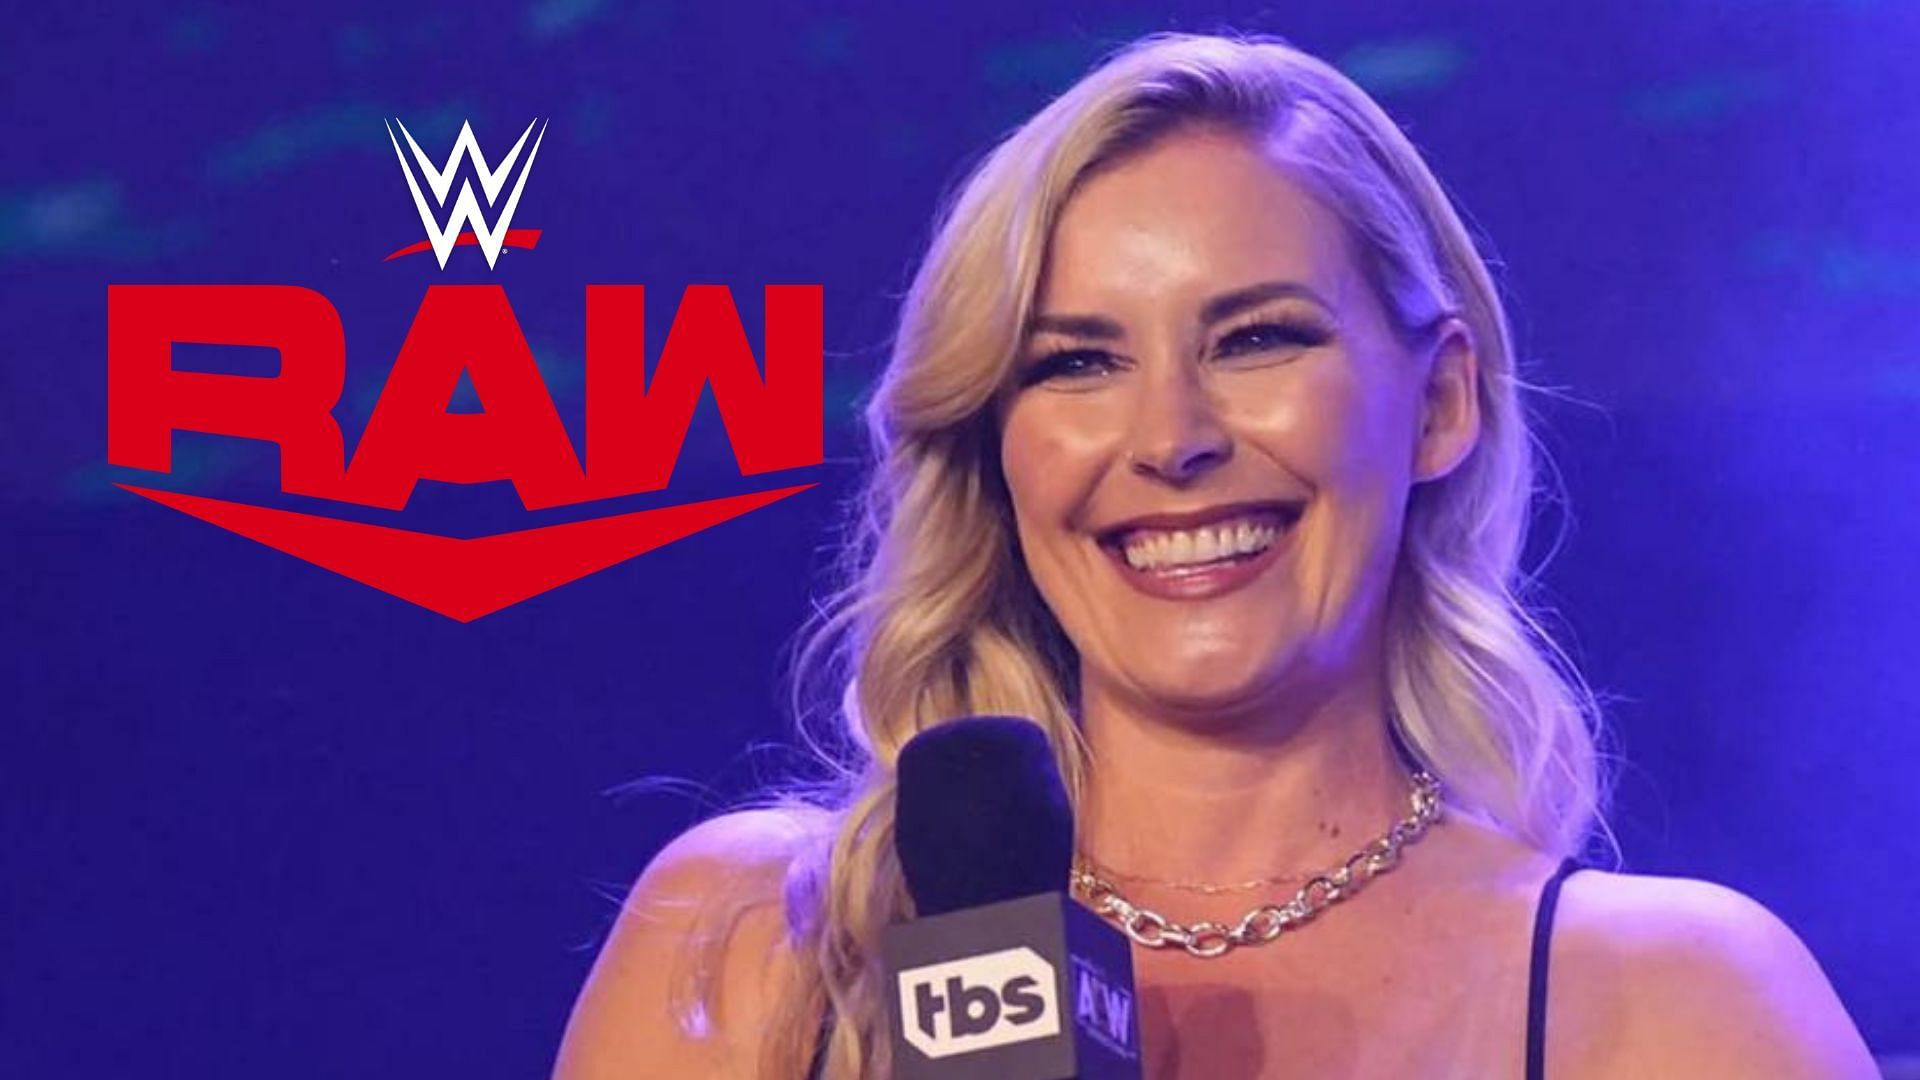 A former Raw superstar was backstage at AEW Dynamite